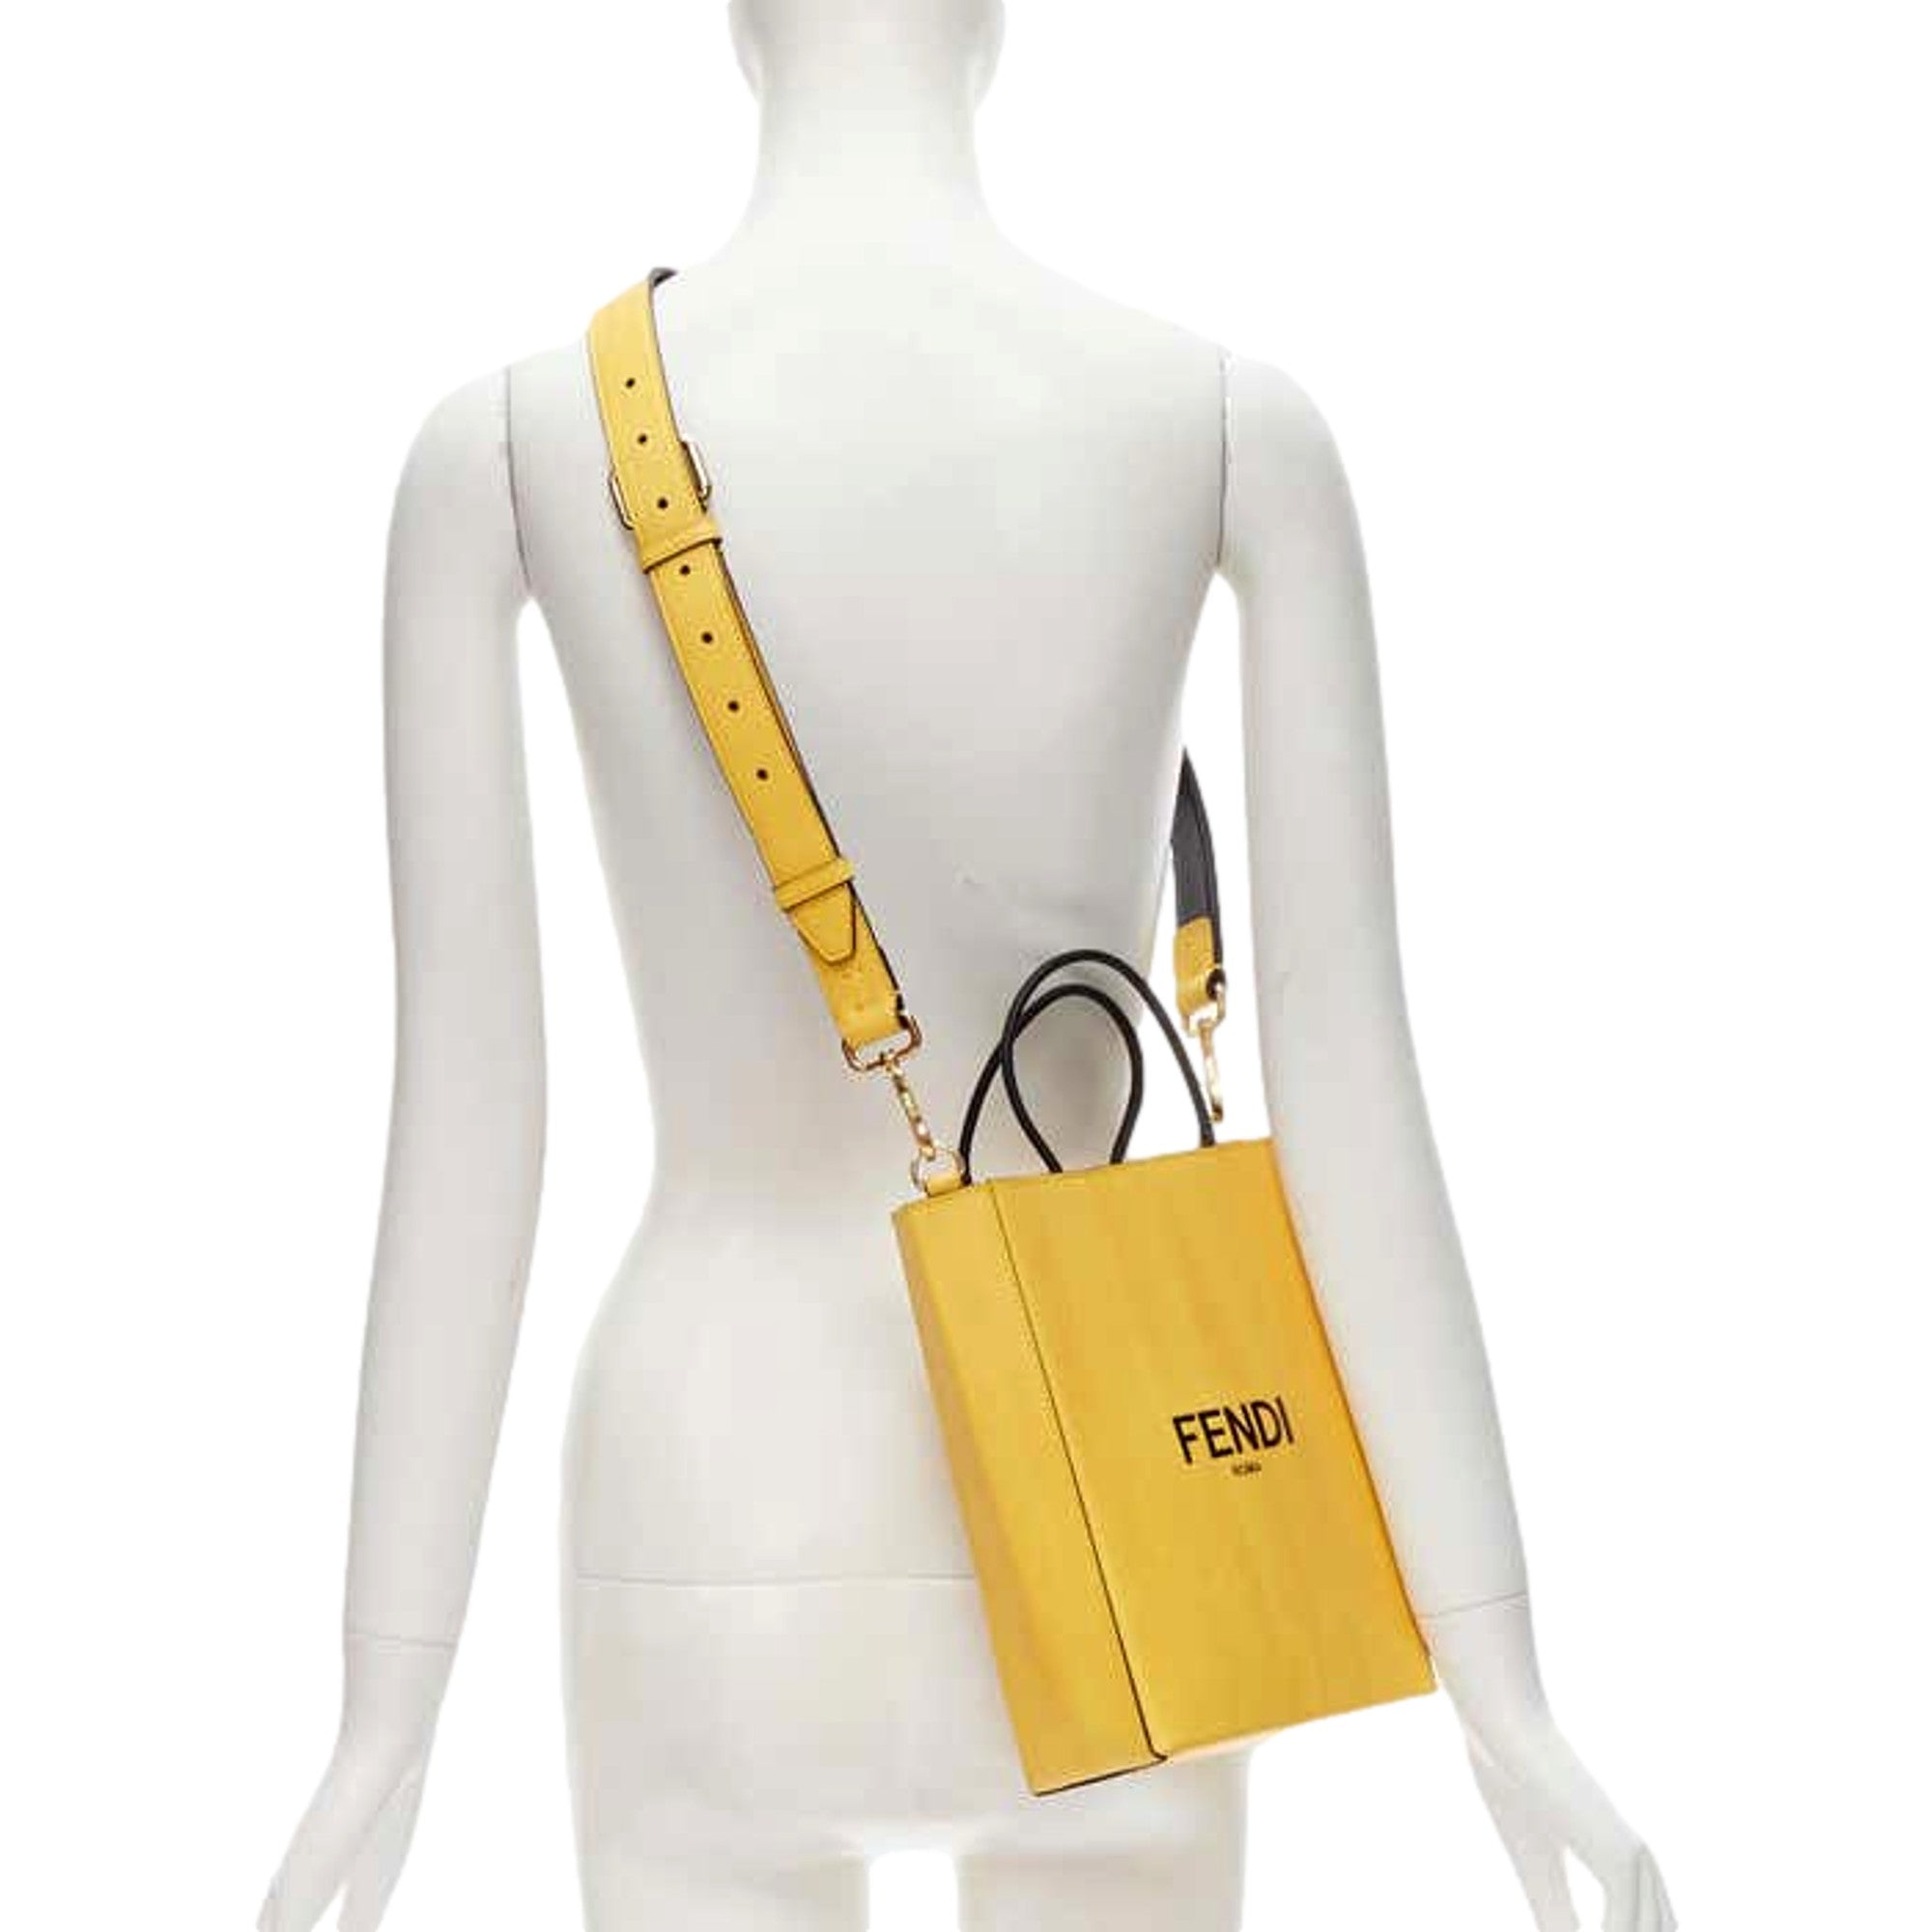 Fendi Roma 2Way Vitello Embossed Yellow Leather Crossbody Shopping Tote Bag